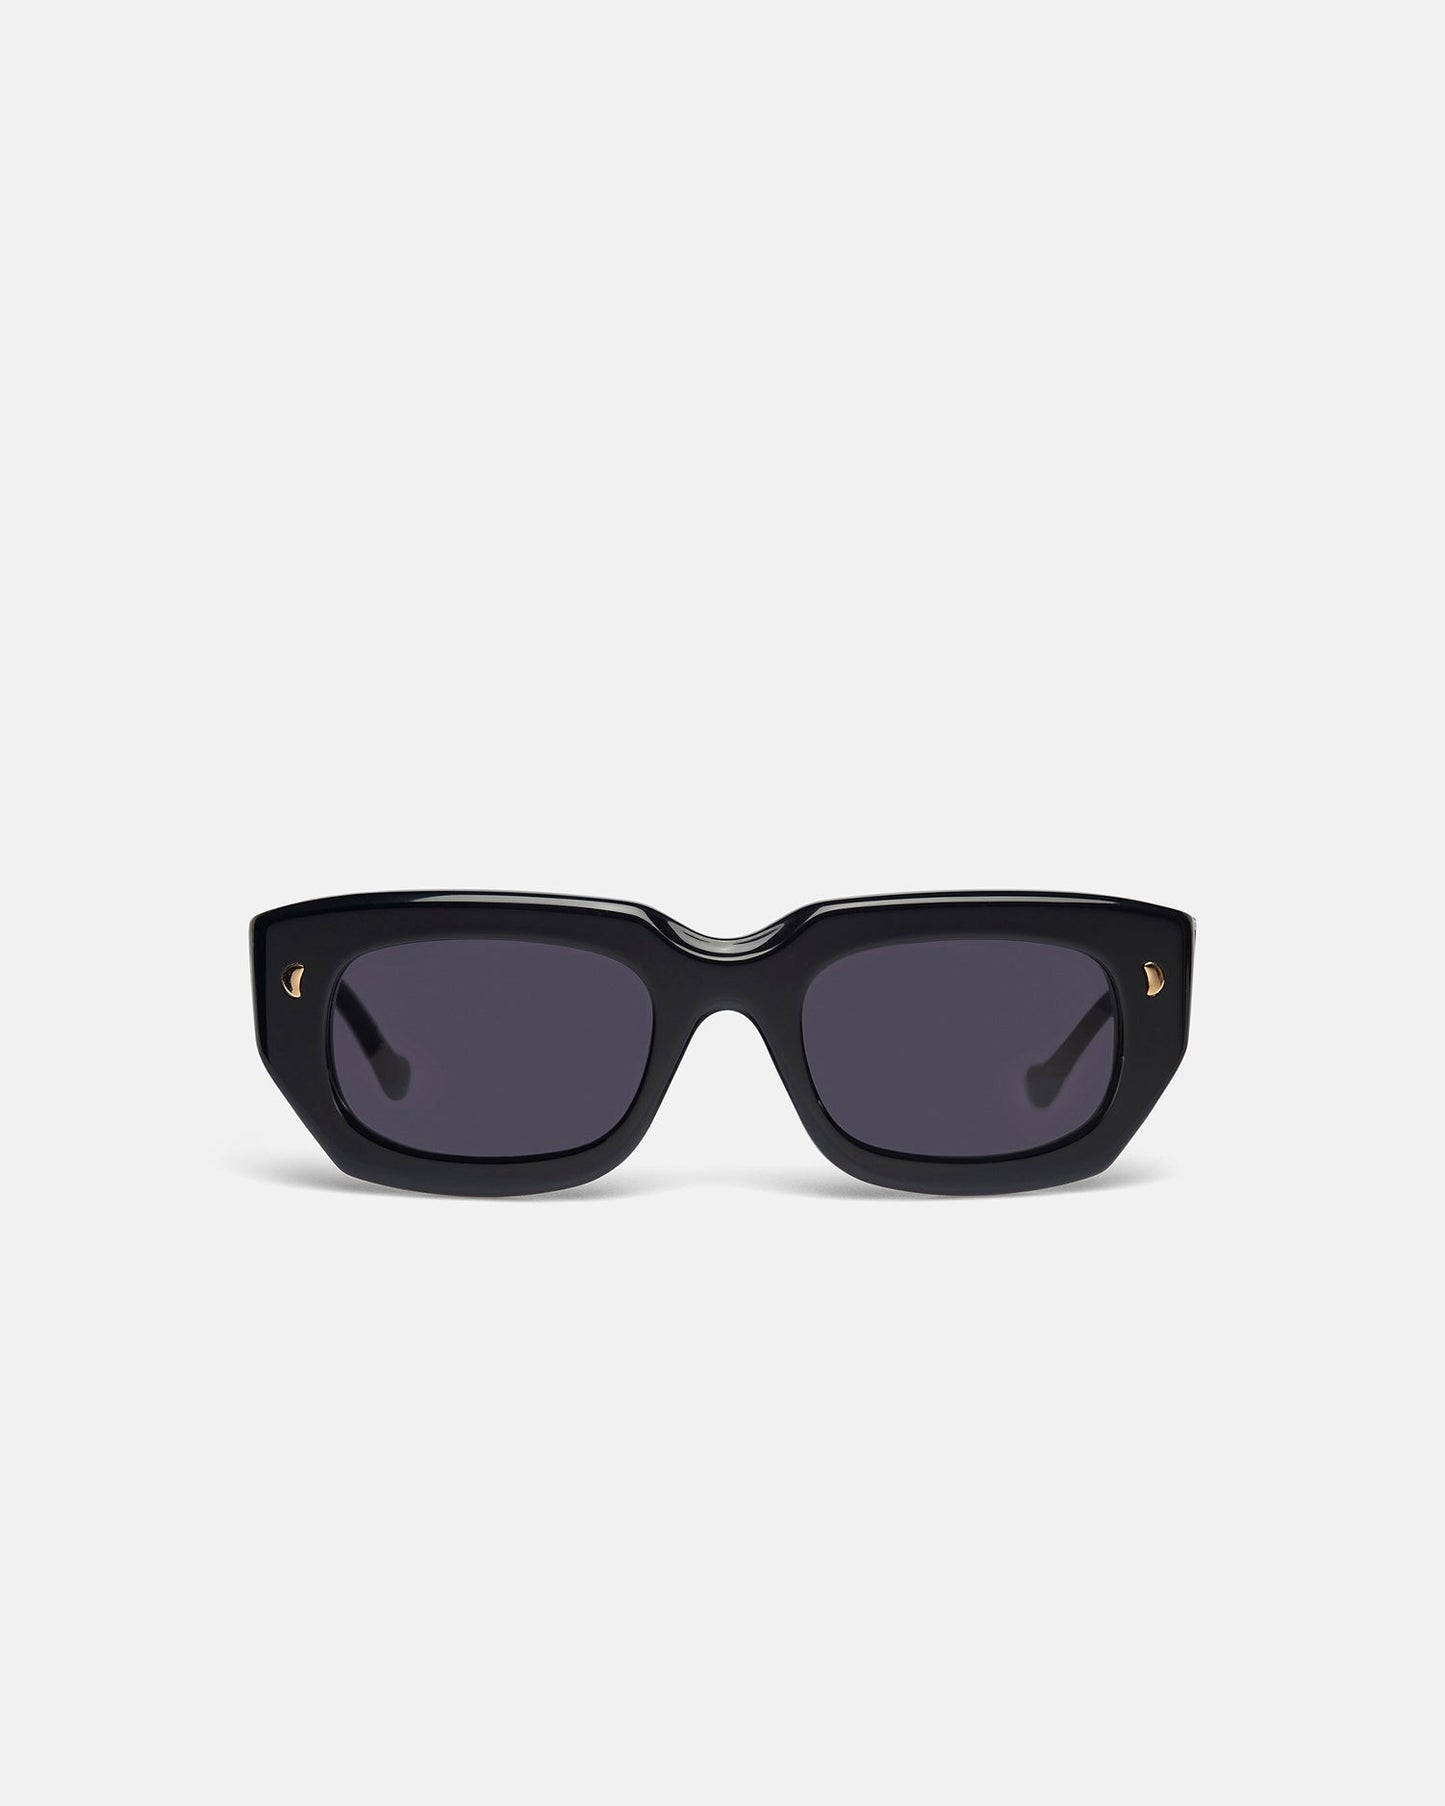 Harley - Bio-Plastic Sunglasses - Black